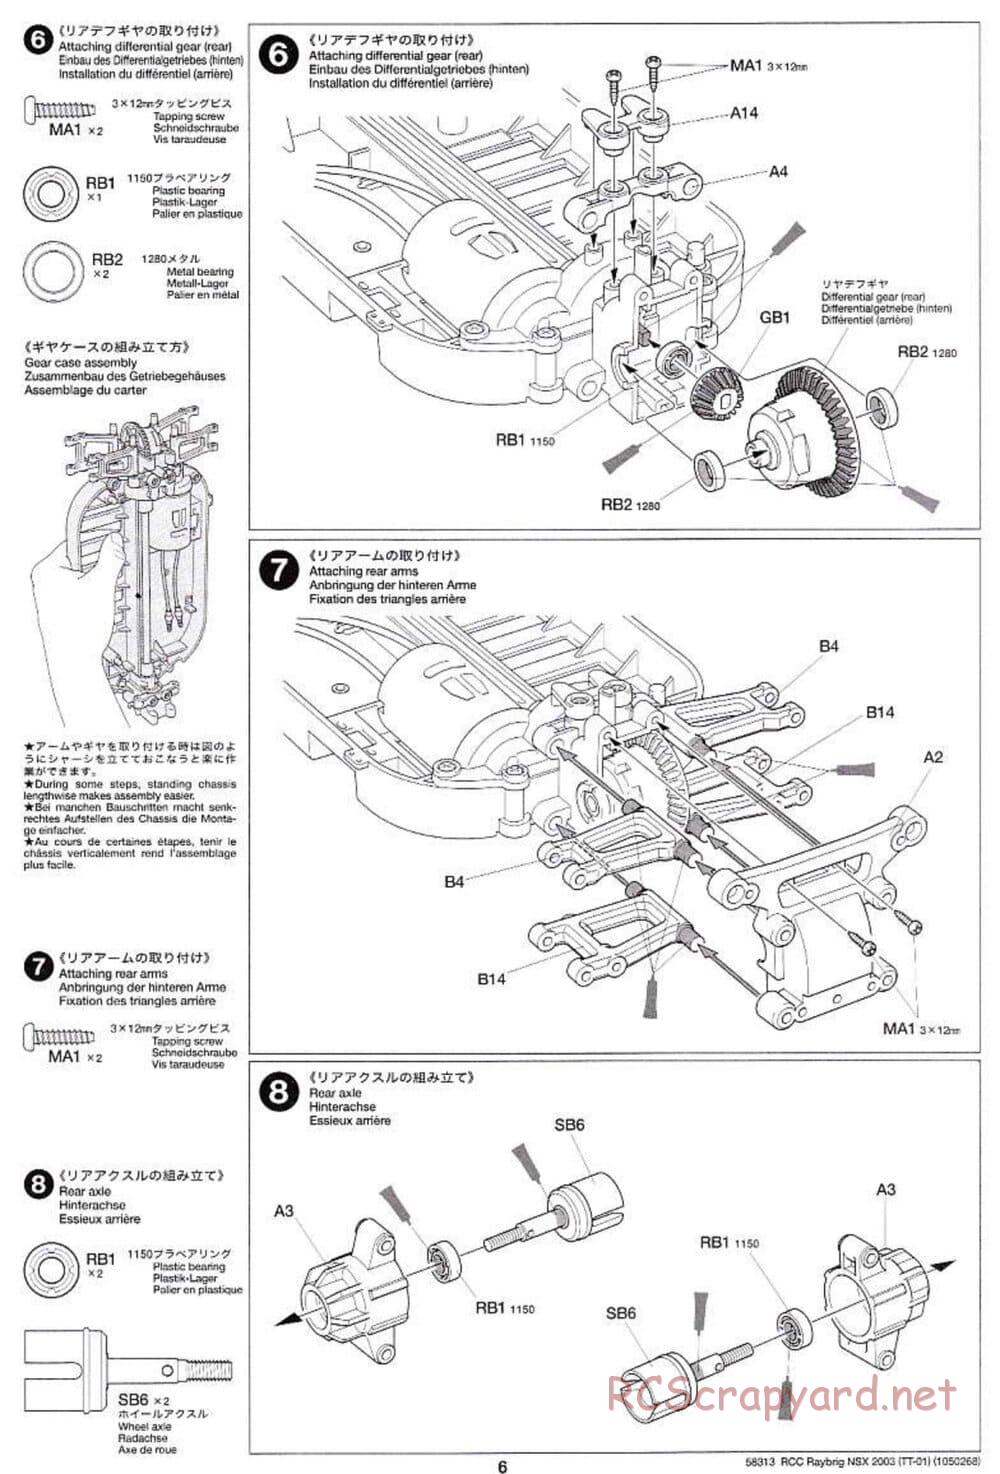 Tamiya - Raybrig NSX 2003 - TT-01 Chassis - Manual - Page 6